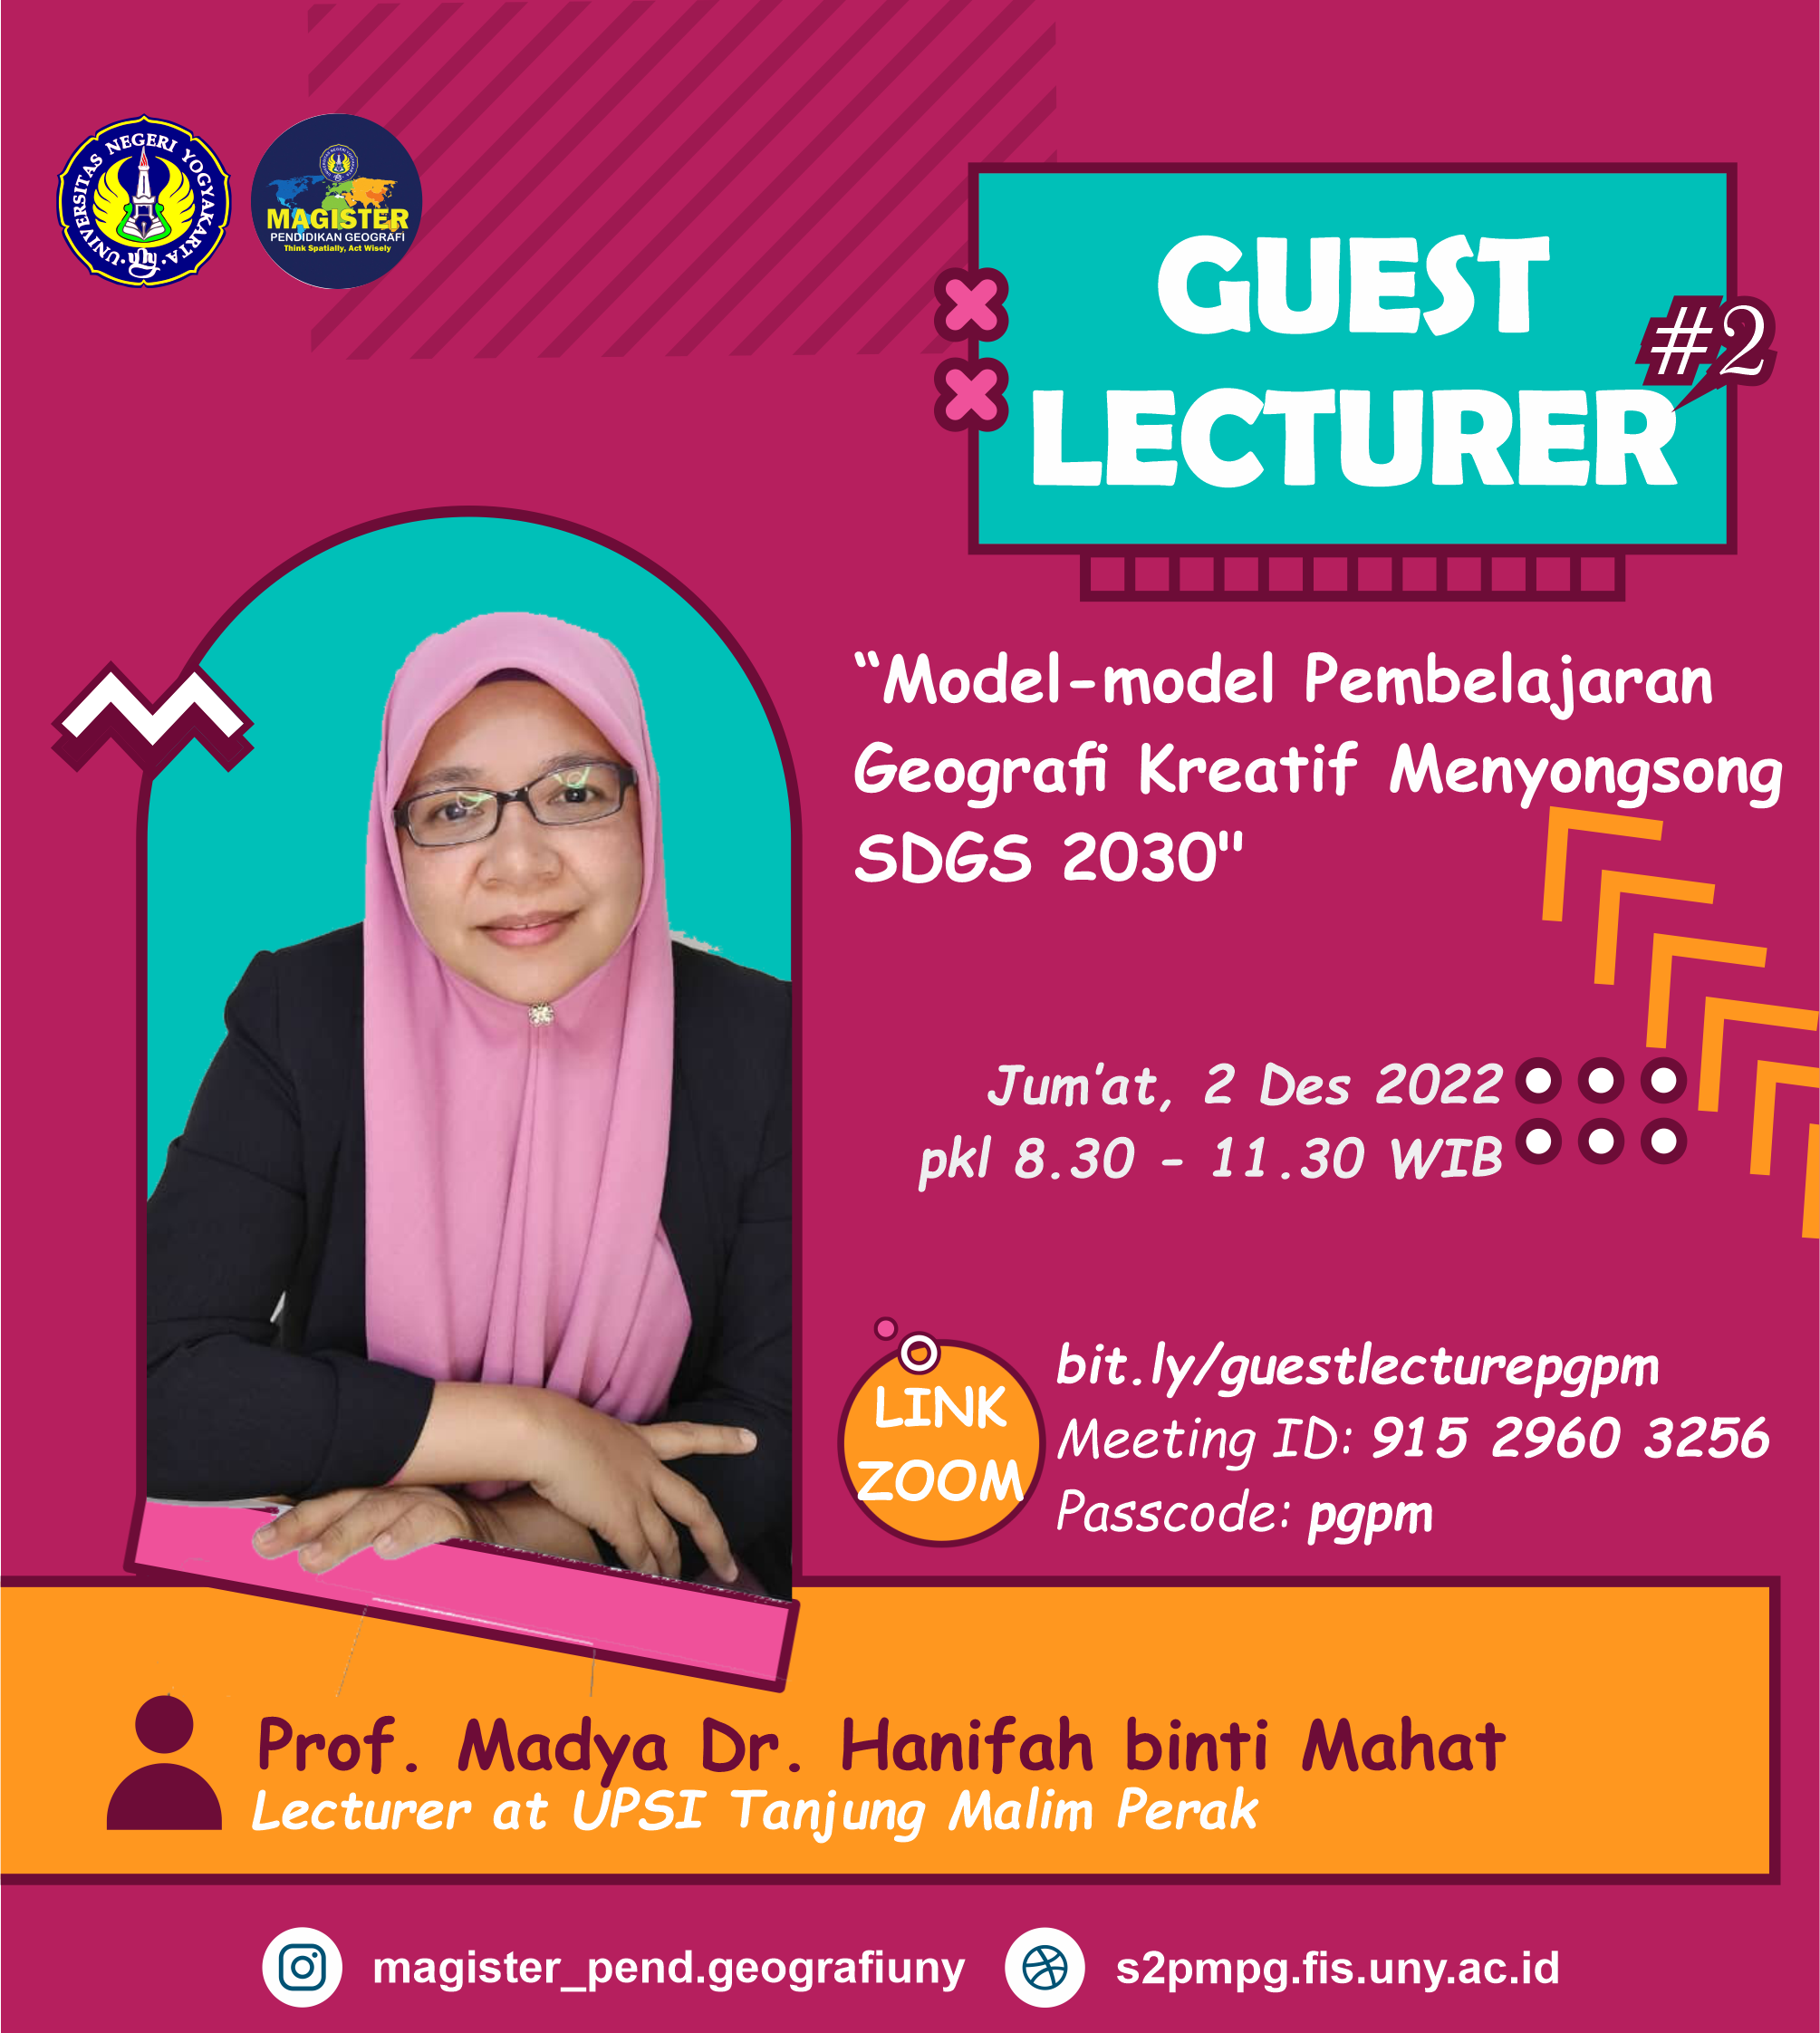 Guest Lecturer #2 2022